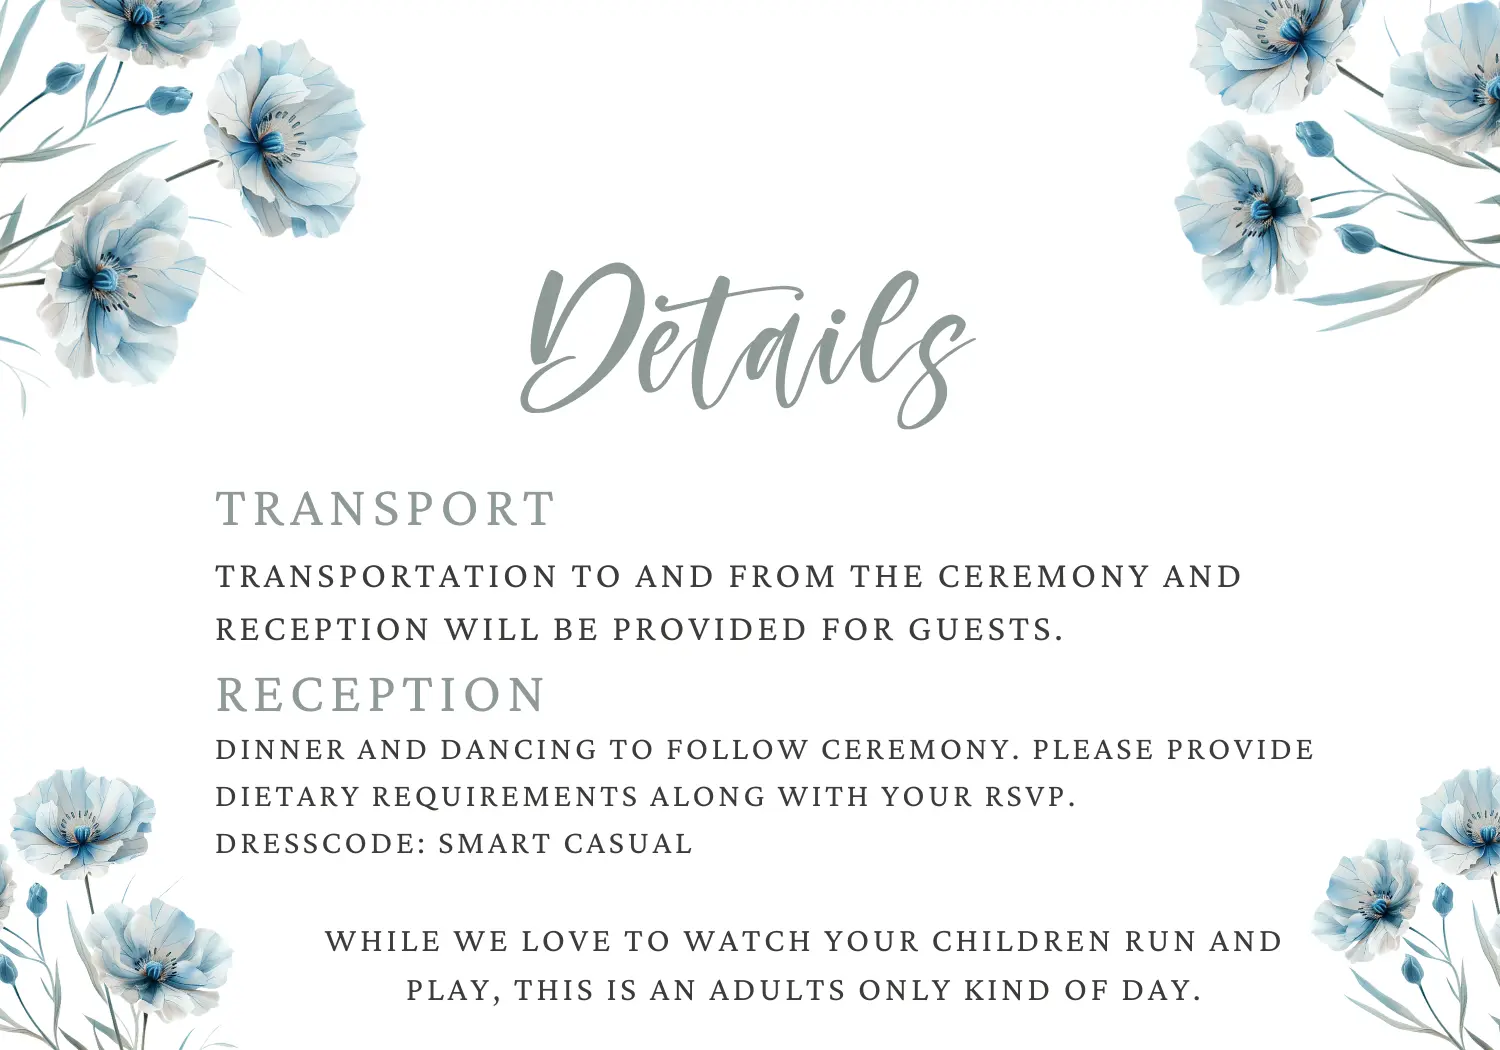 Wedding Details Information Card Template